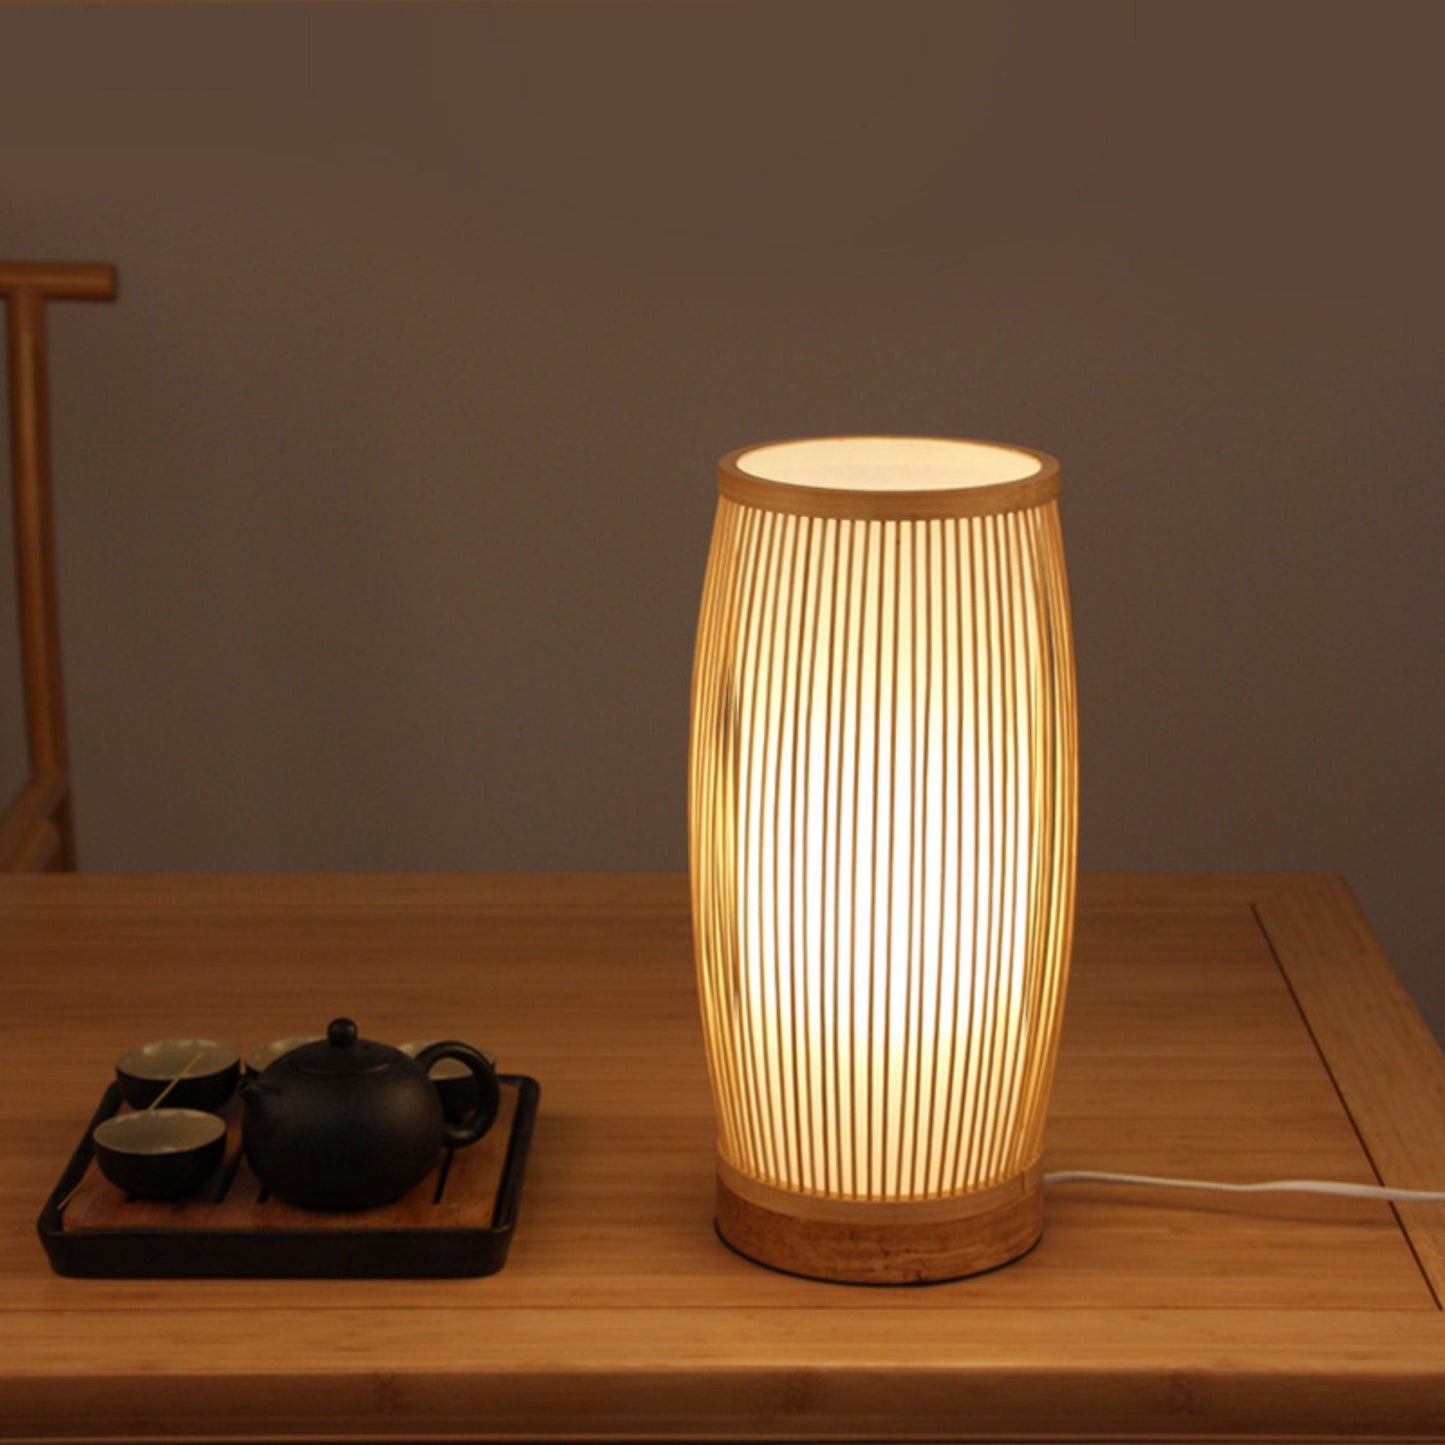 Bamboo Rattan Vertical Floor Lamp | Mid Century Modern, Bohemian, Wicker Lampshade, Rustic Home Decor, Desk Lamp, Bedside Lamp, Mini Lamp - Floor Lamp -